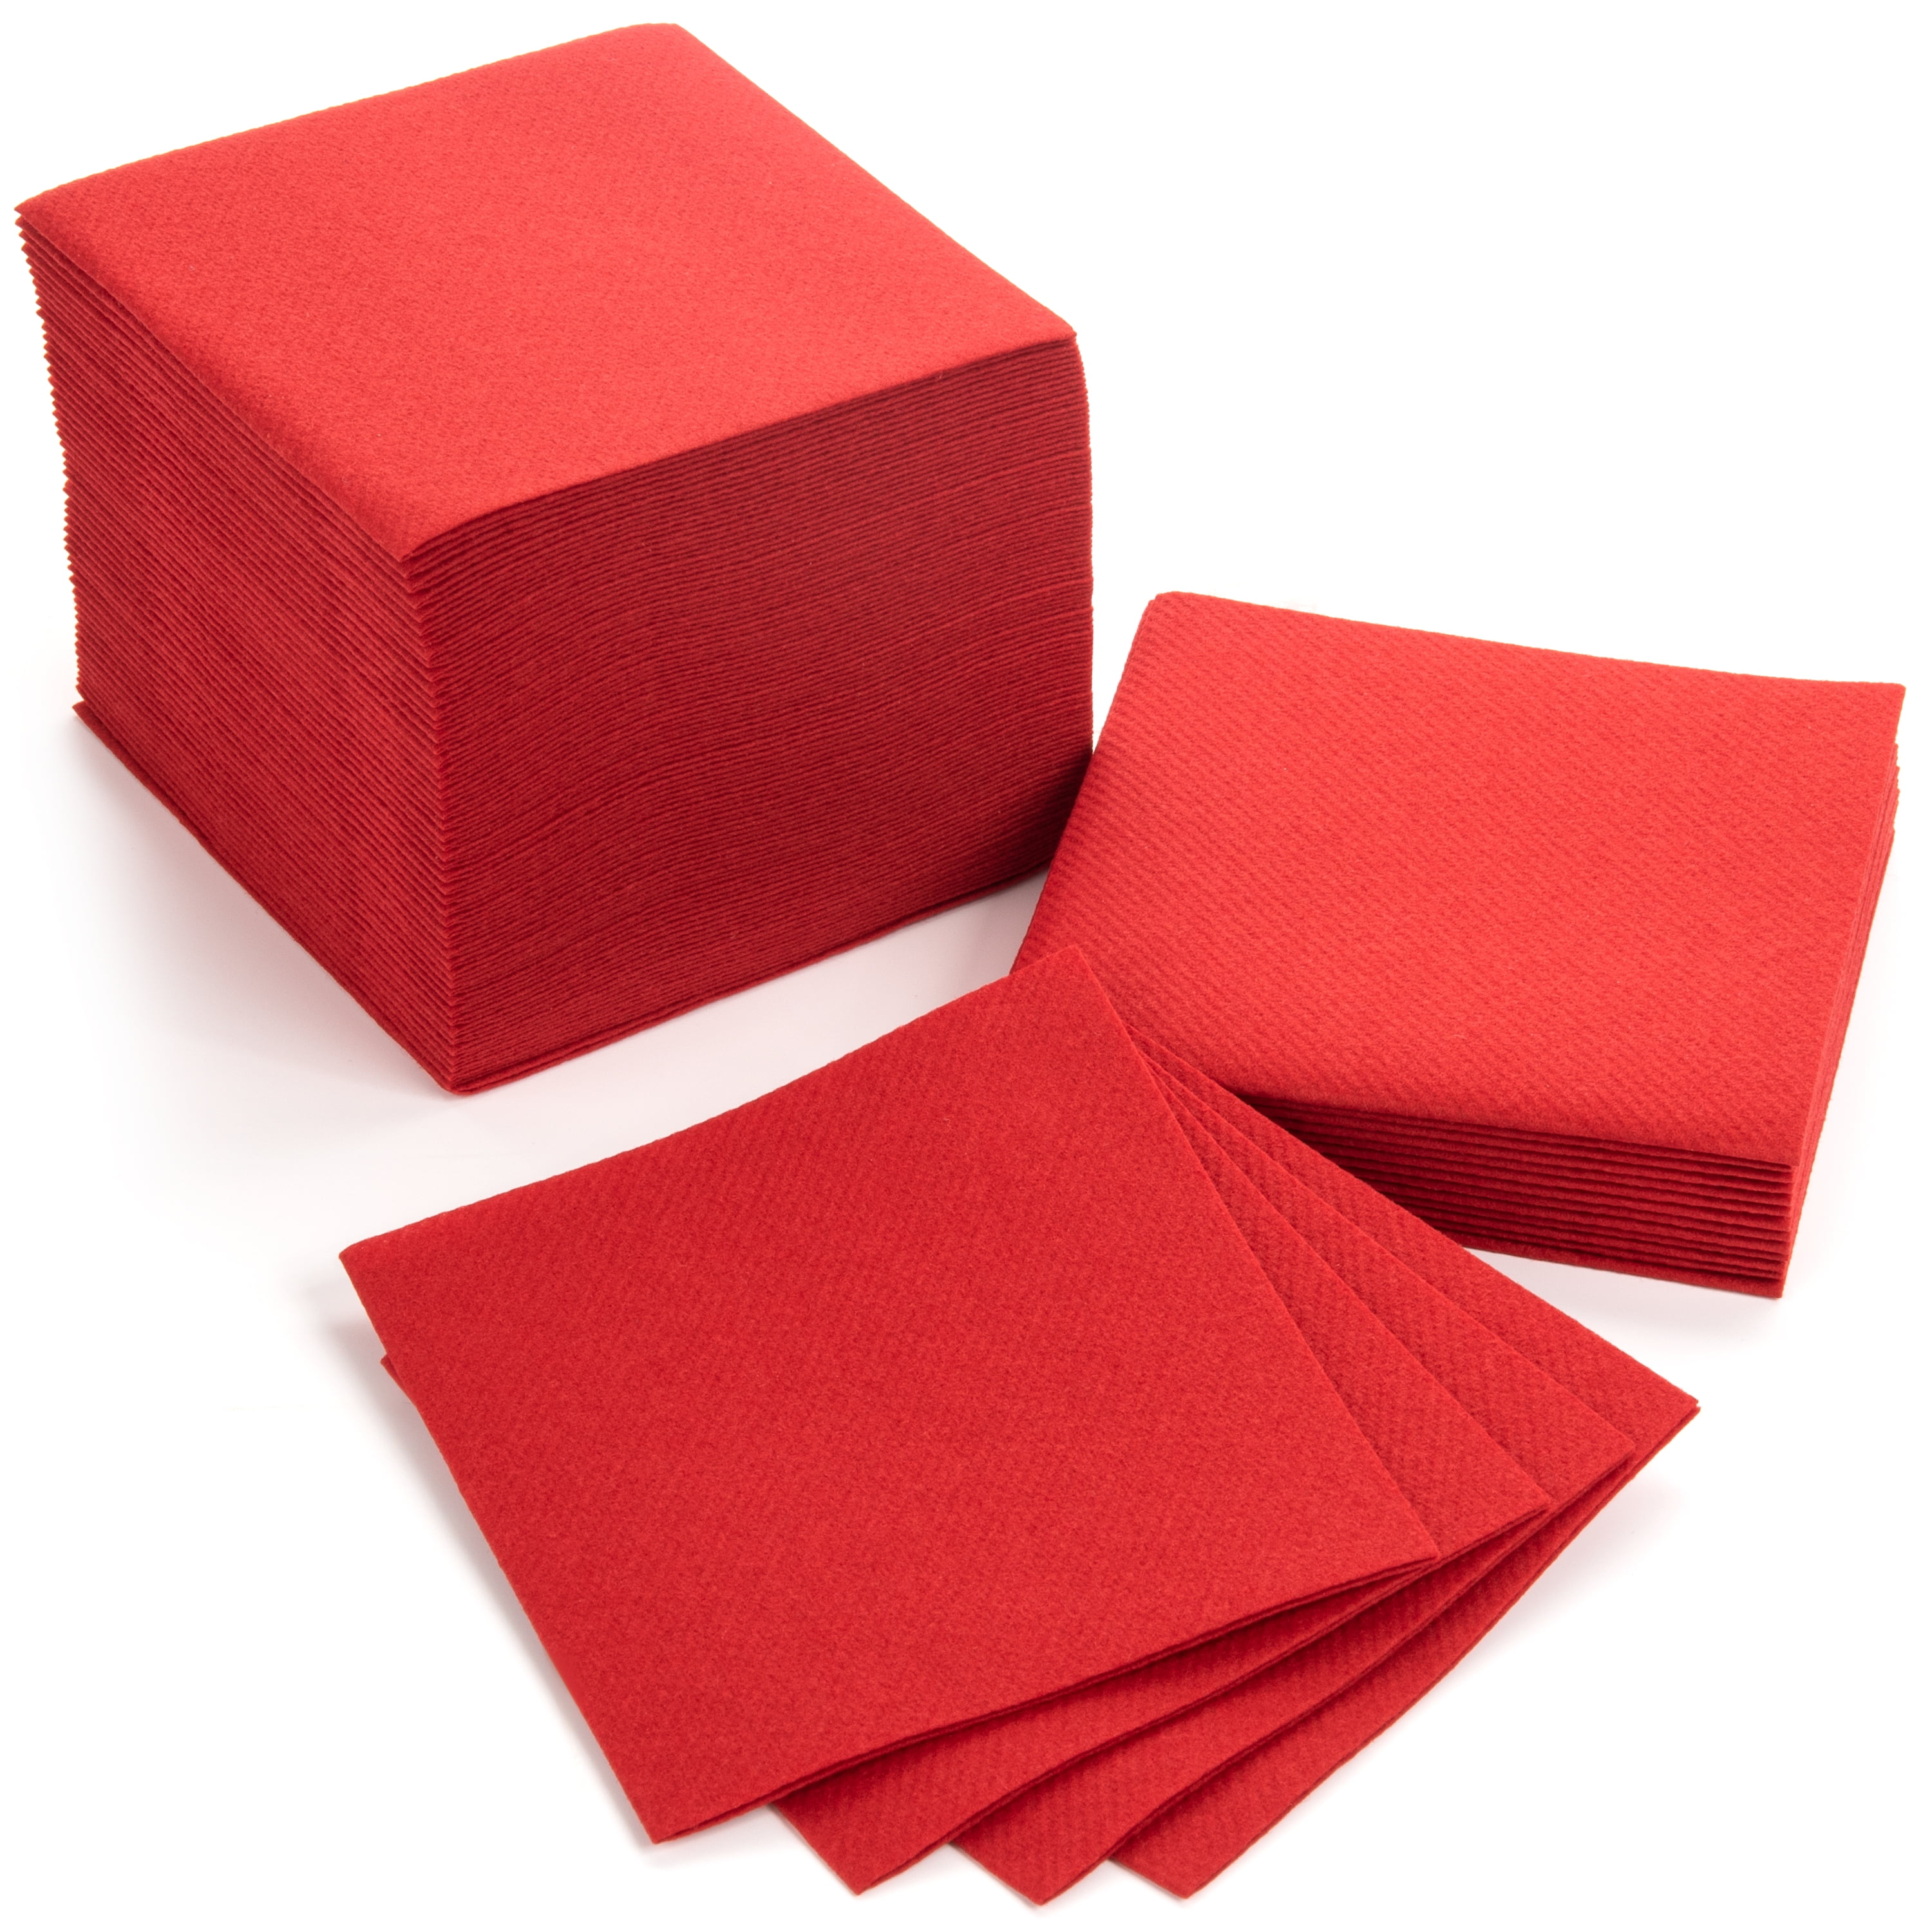 10 x 10 Red Beverage Napkins (Bulk Pack) - Pack